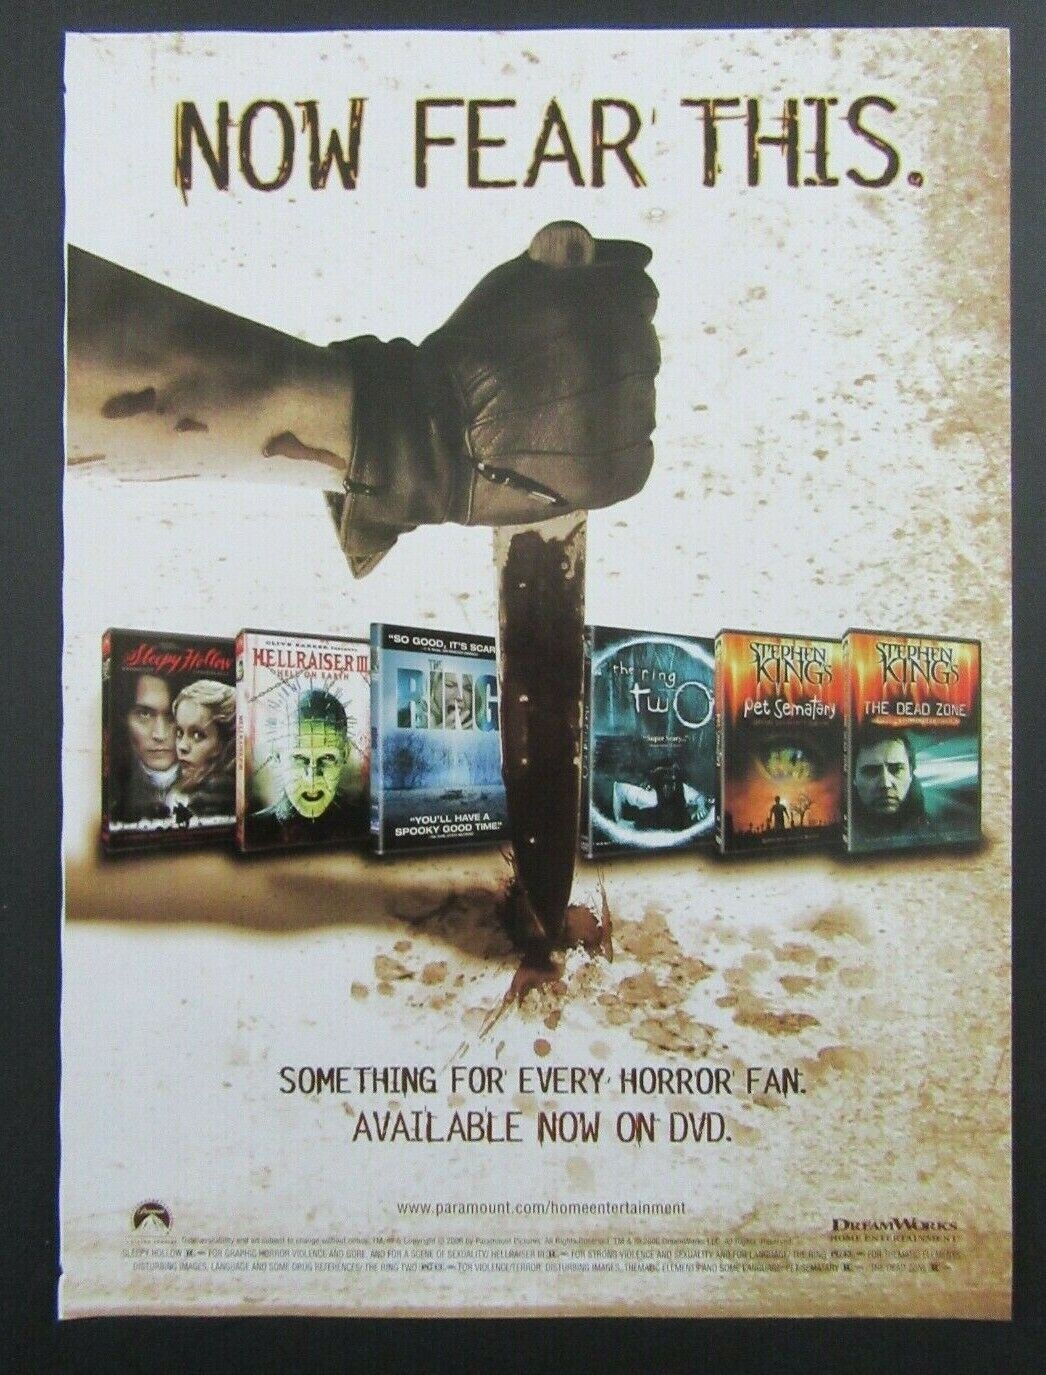 2006 PARAMOUNT/DREAMWORKS Entertainment Horror Movie DVD Collection Magazine Ad